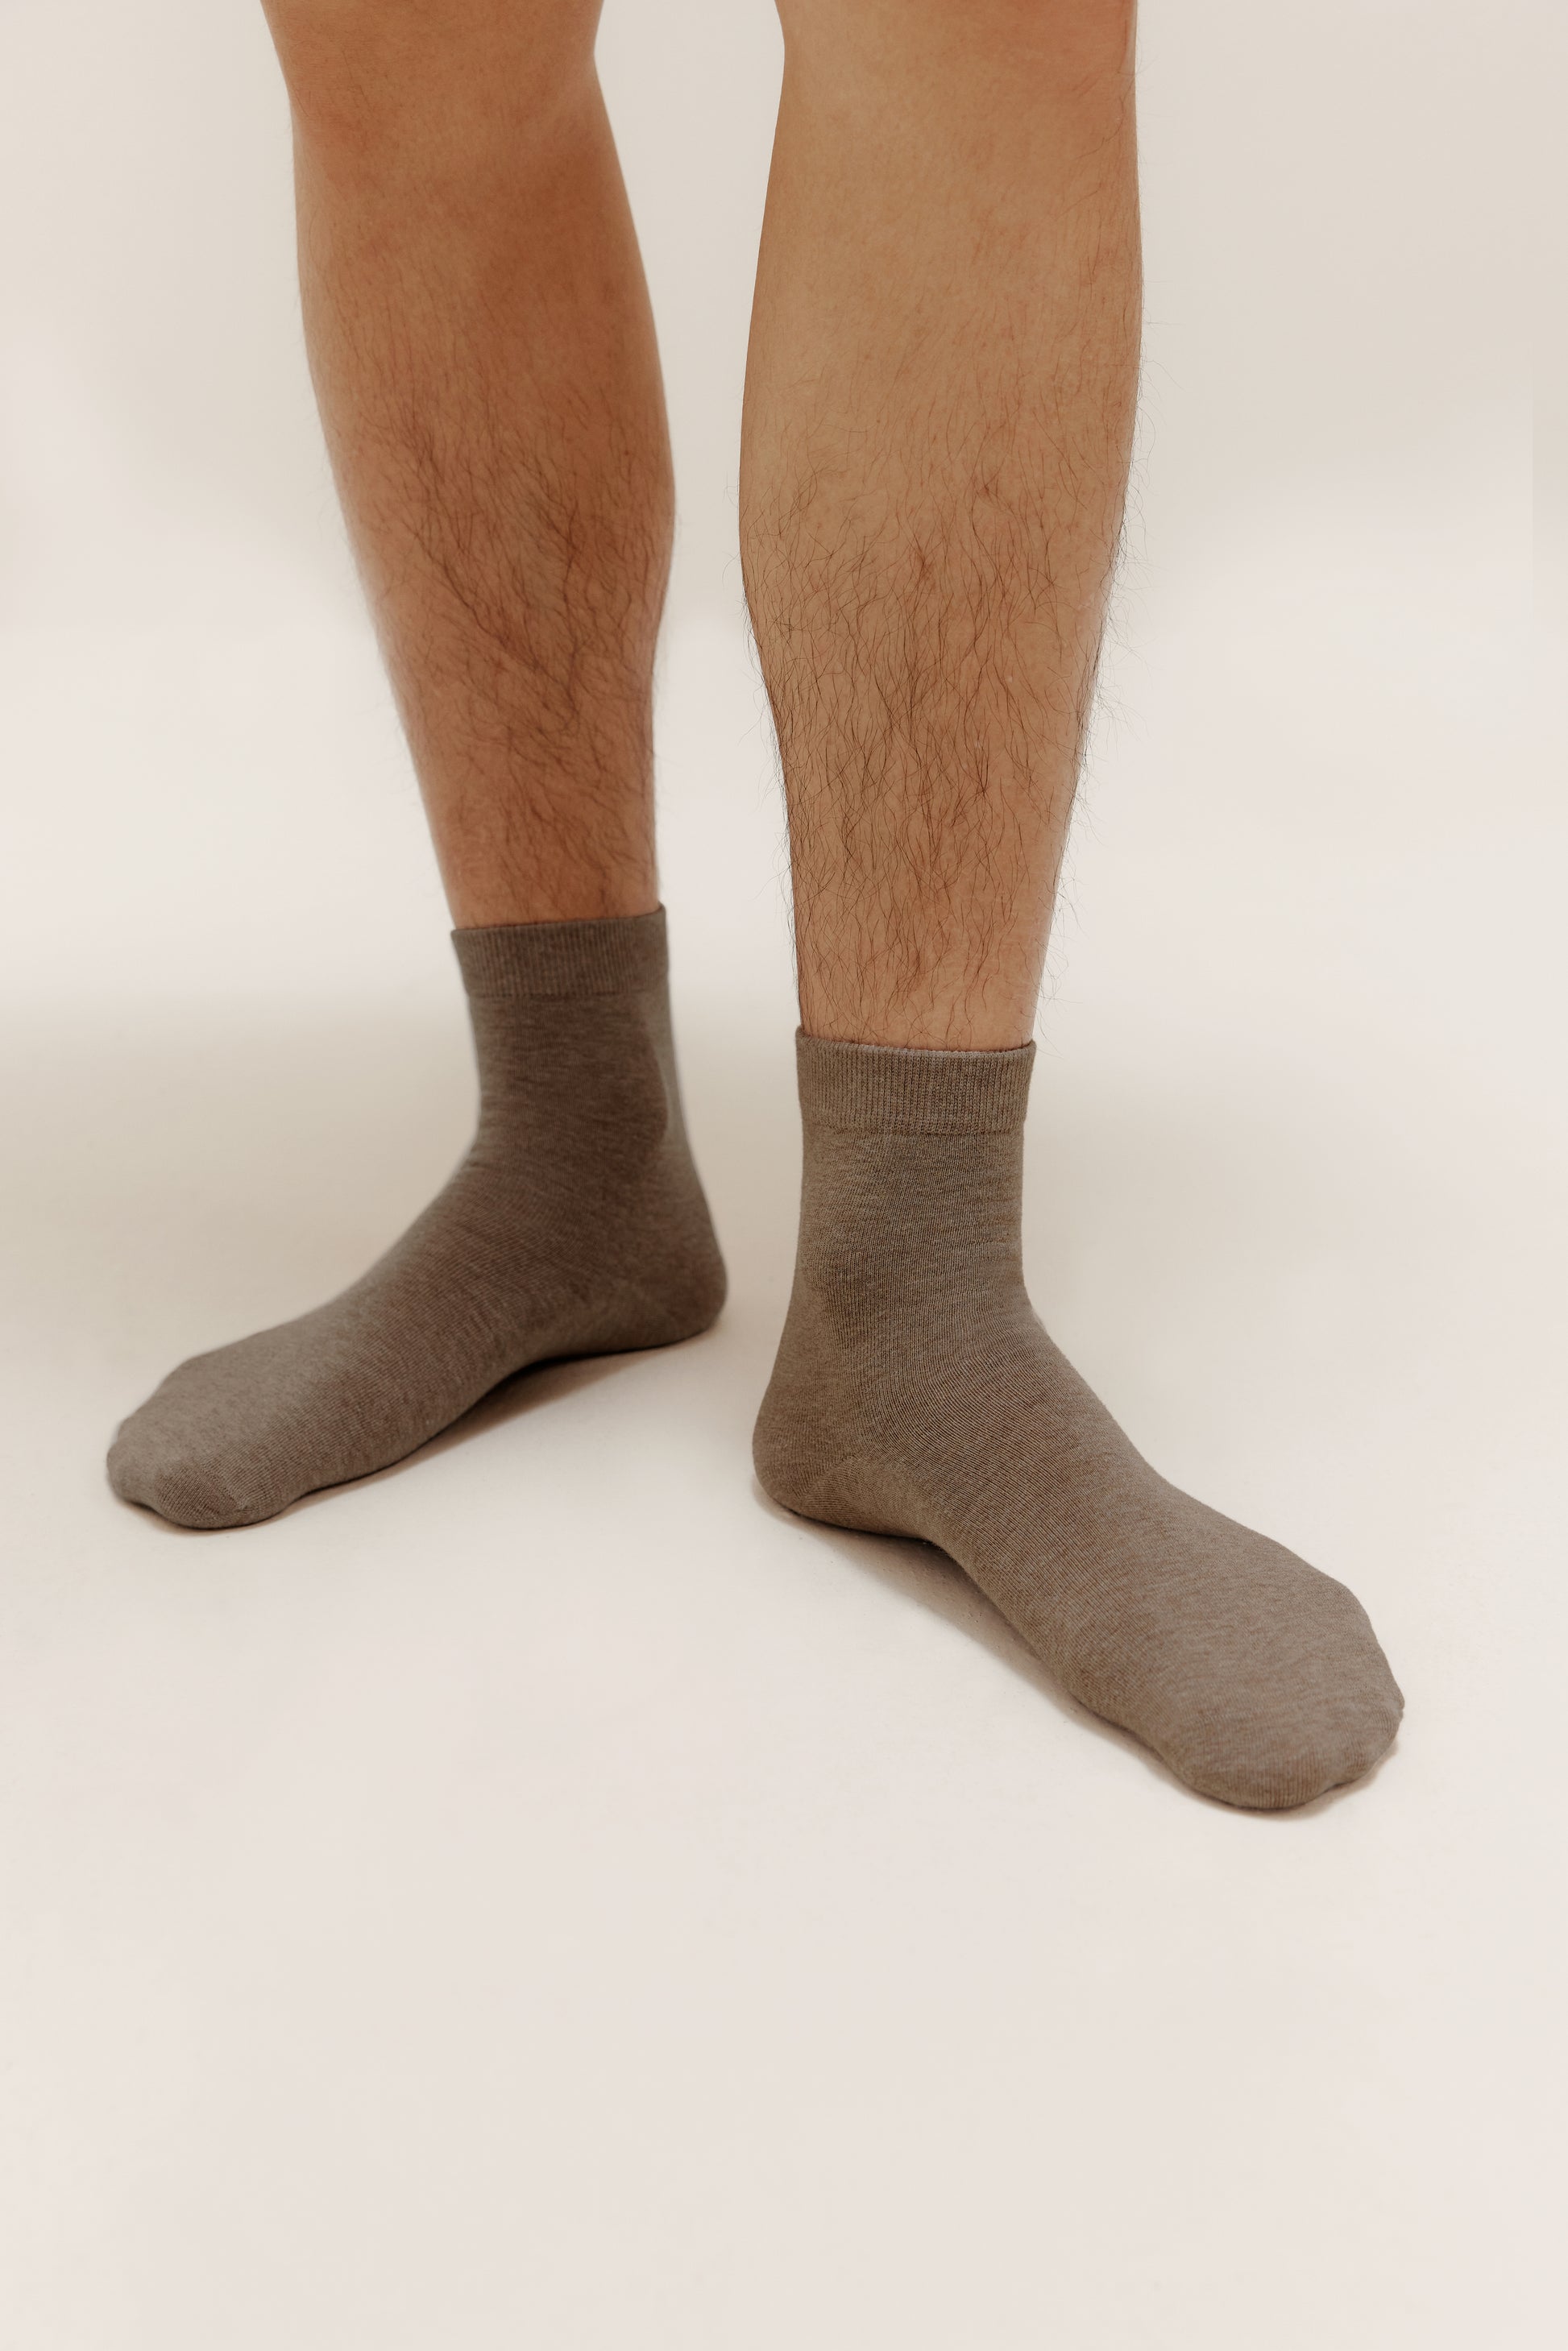 Bow Tie Hollow Calf Socks Lace Pure Desire MID-Calf Socks Leg Net